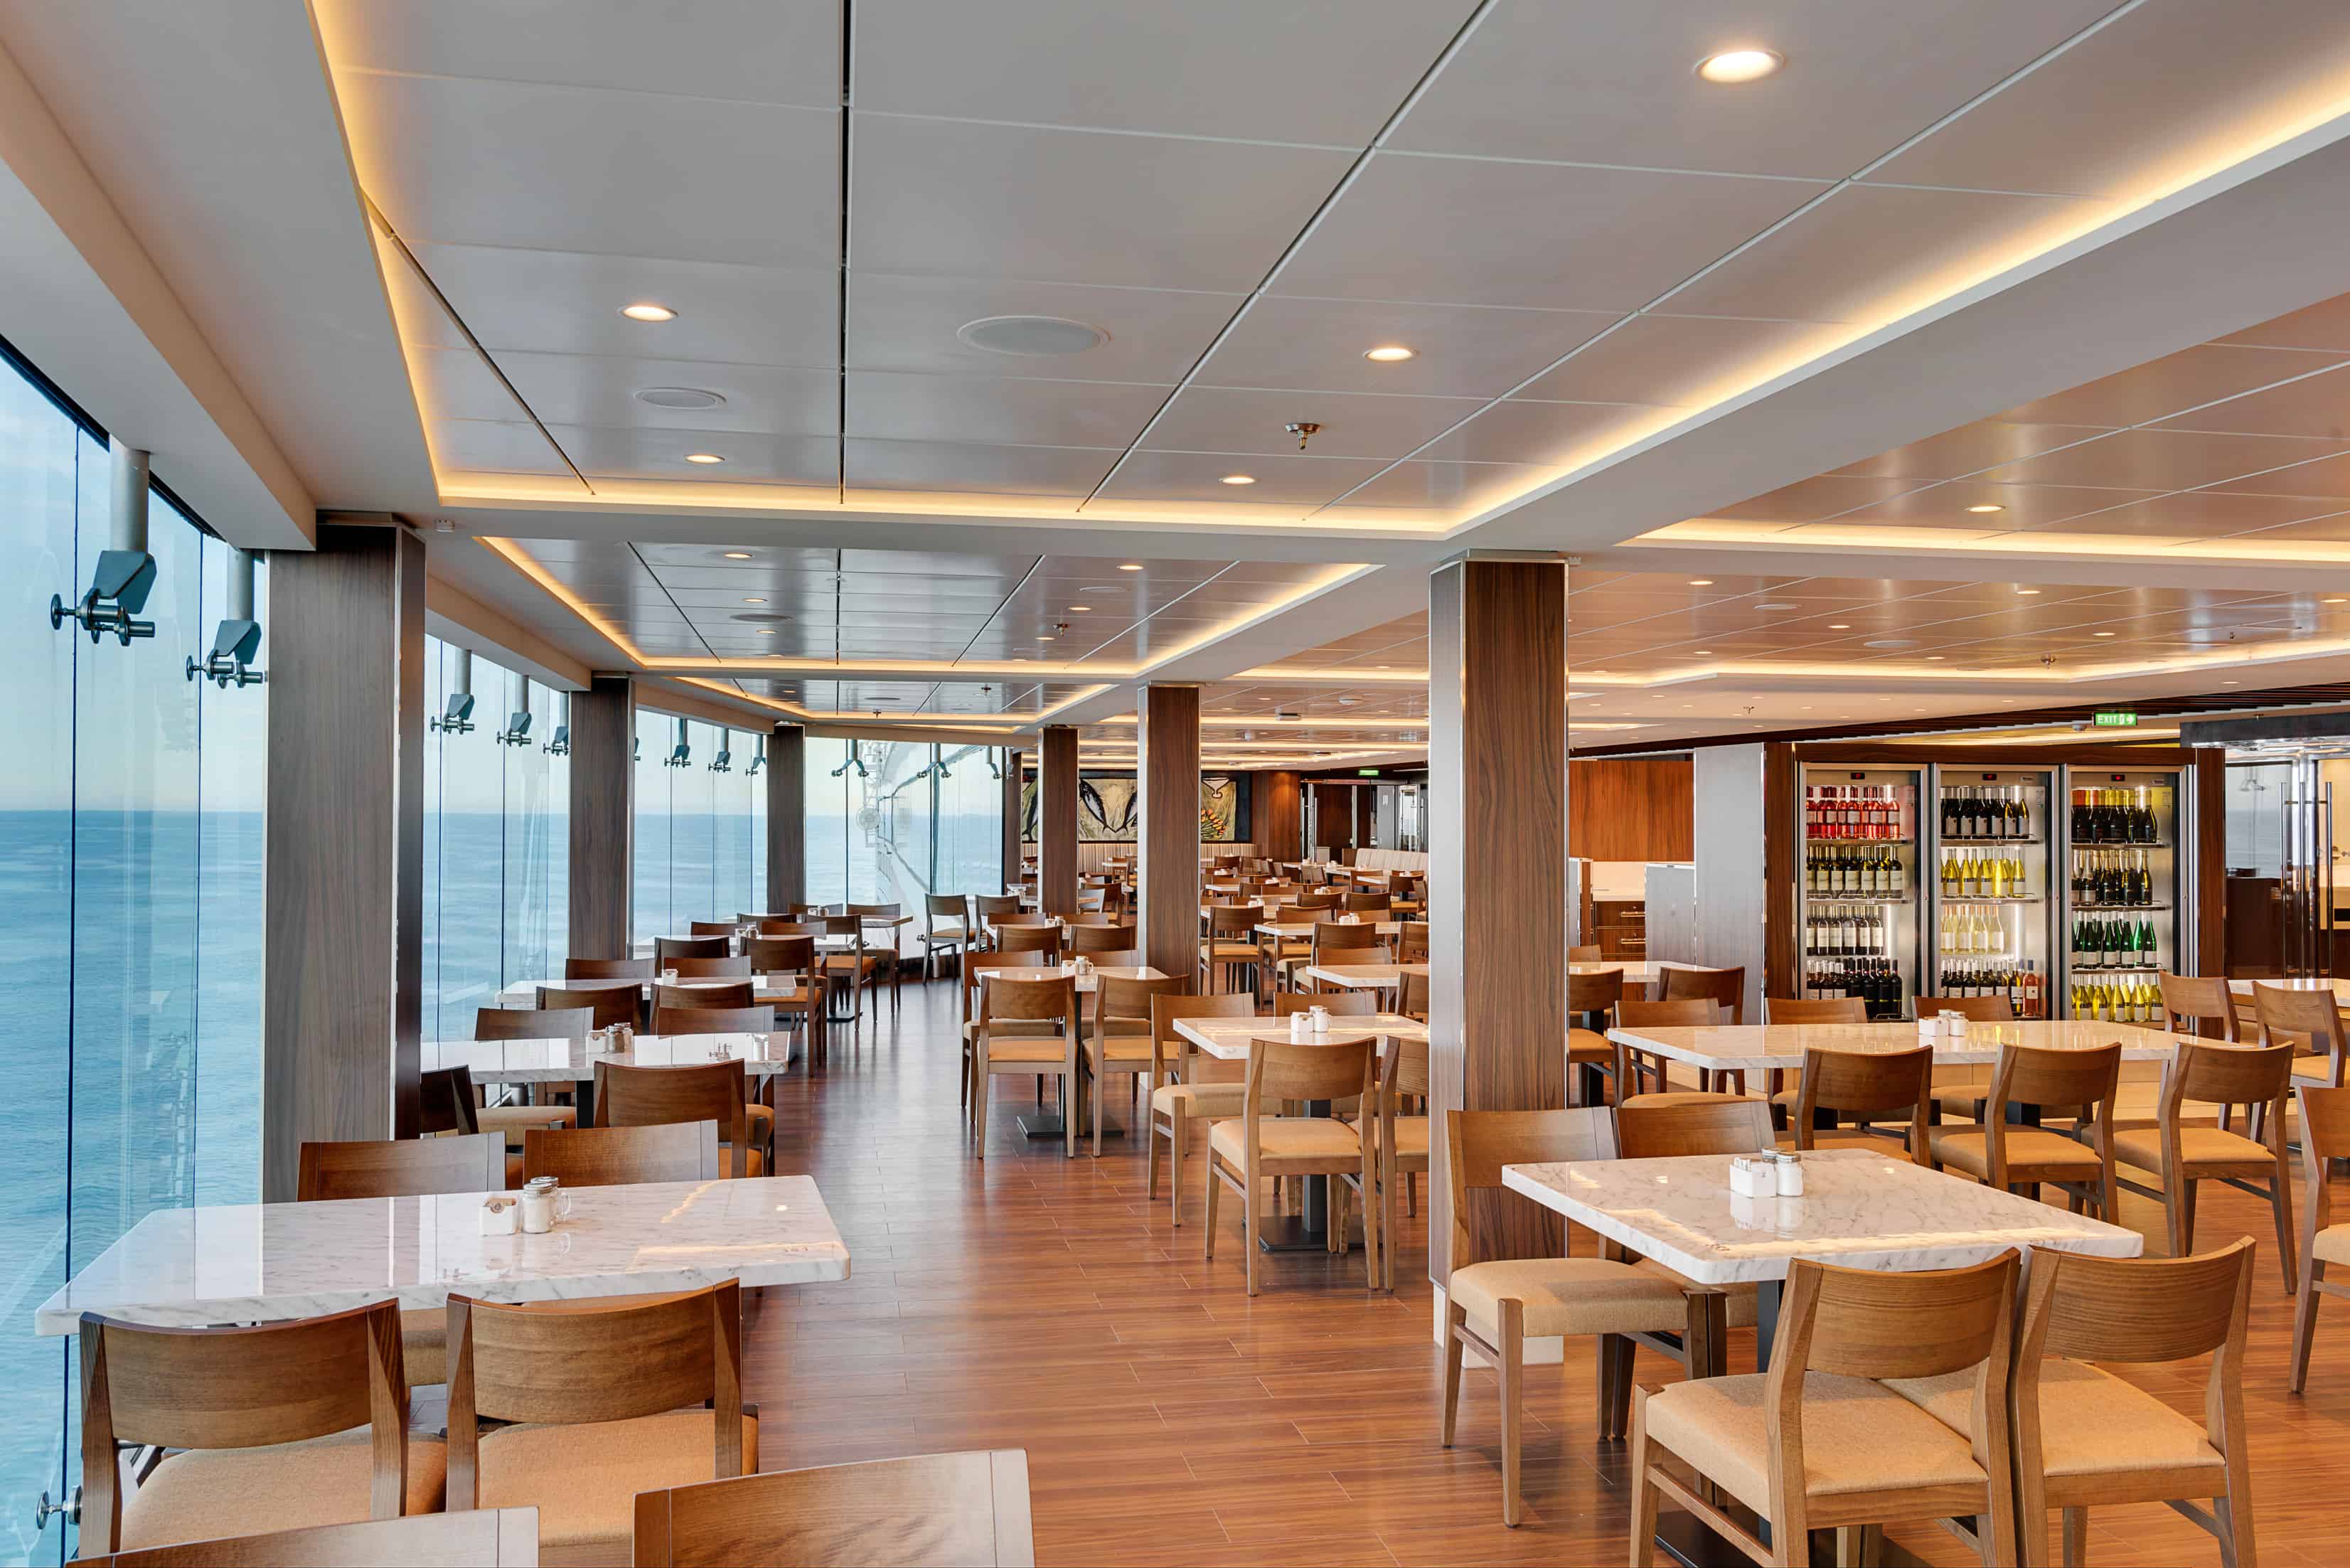 MSC Meraviglia Restaurant Guide 12 Dining Venues Offer International